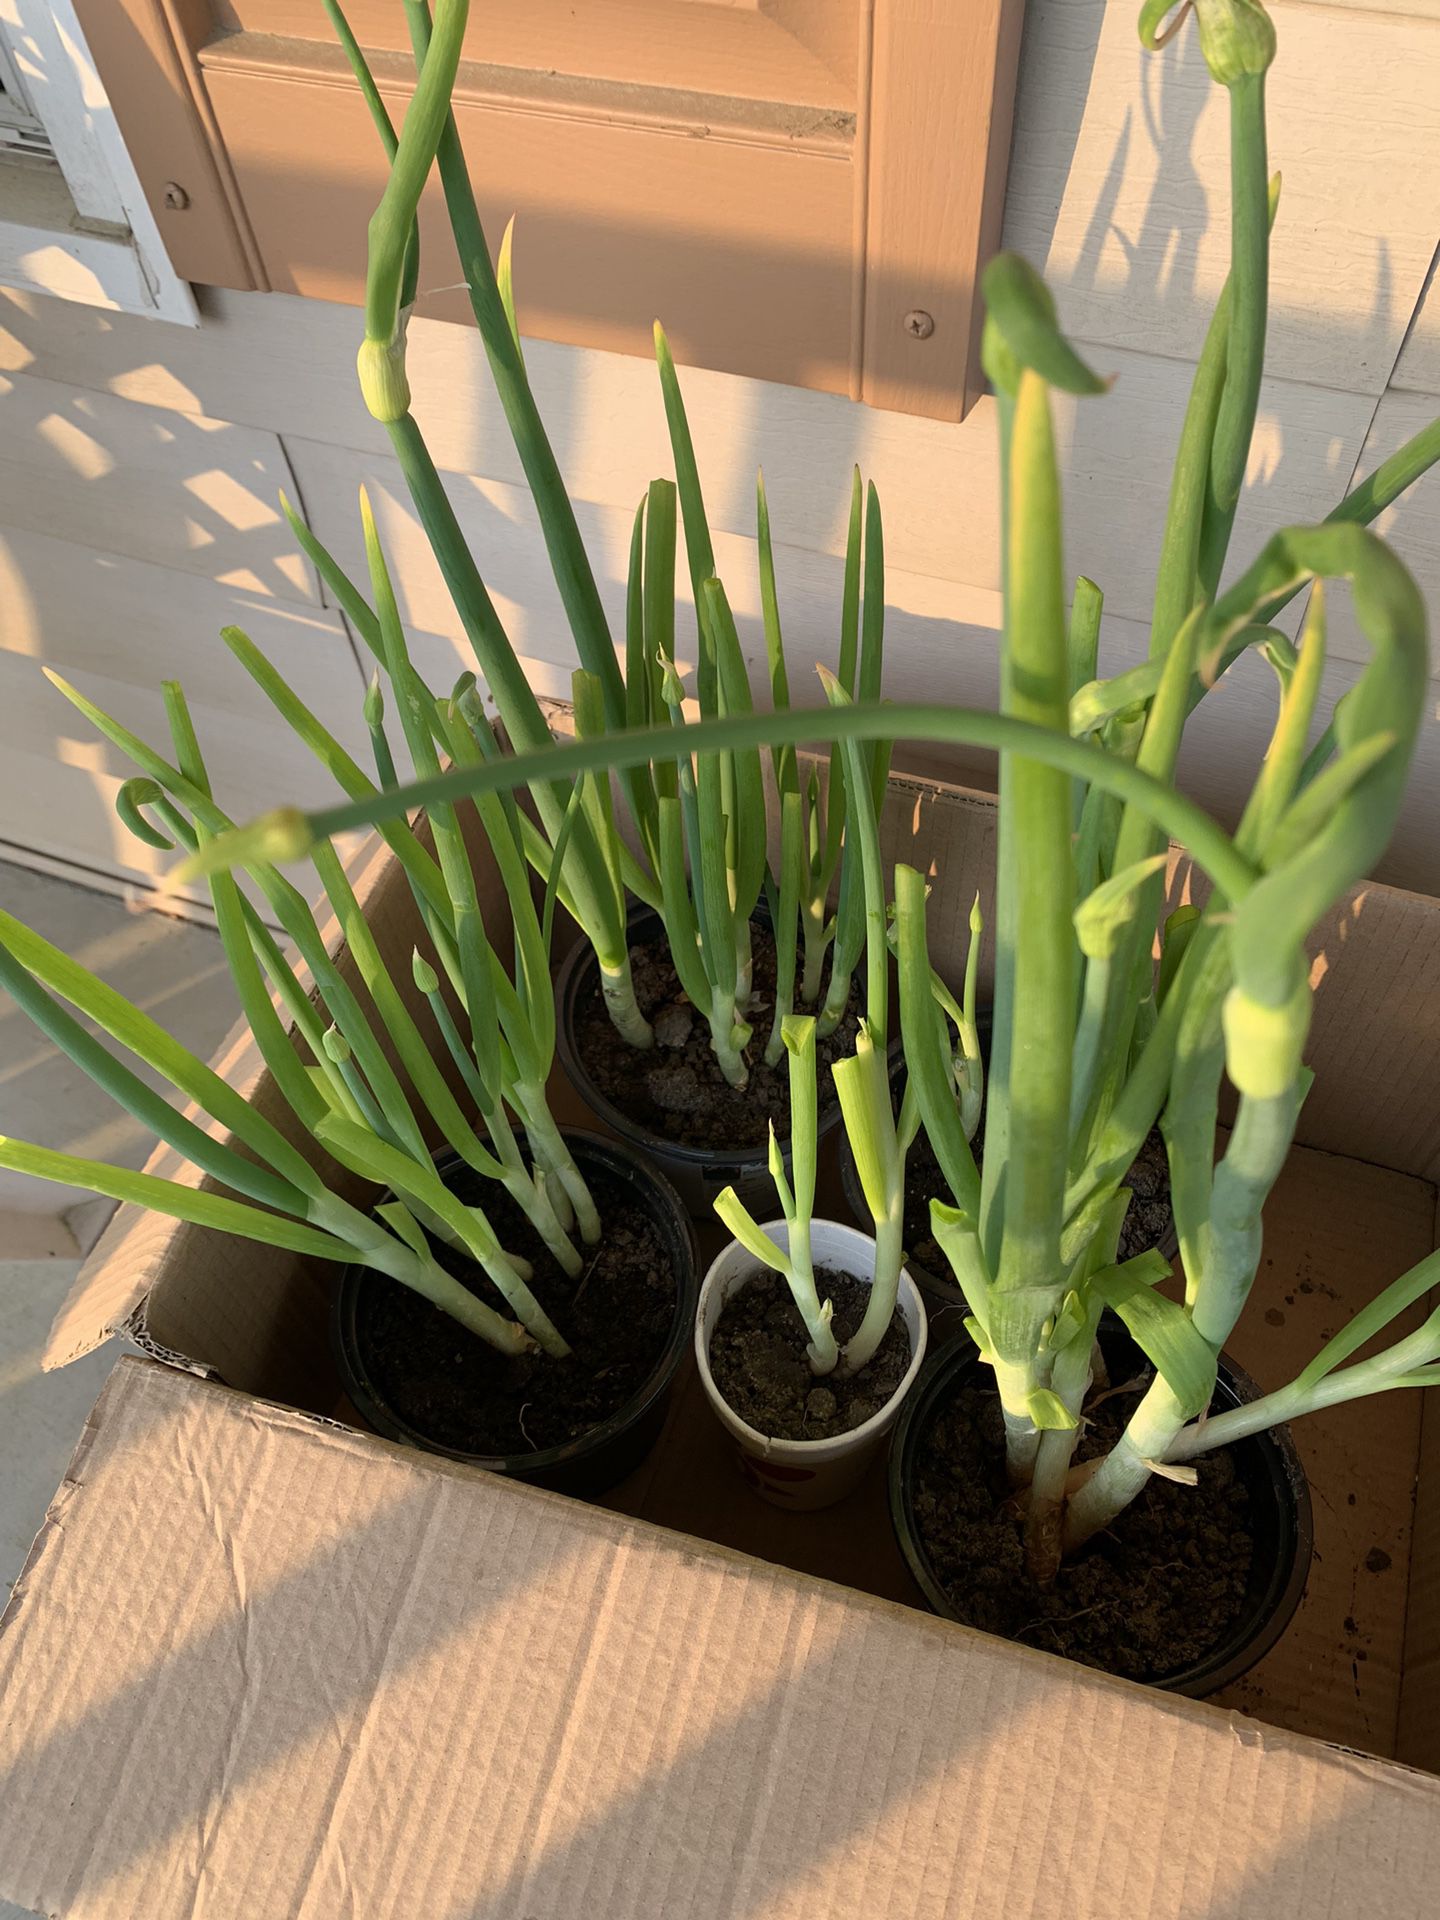 Green Onion Plants